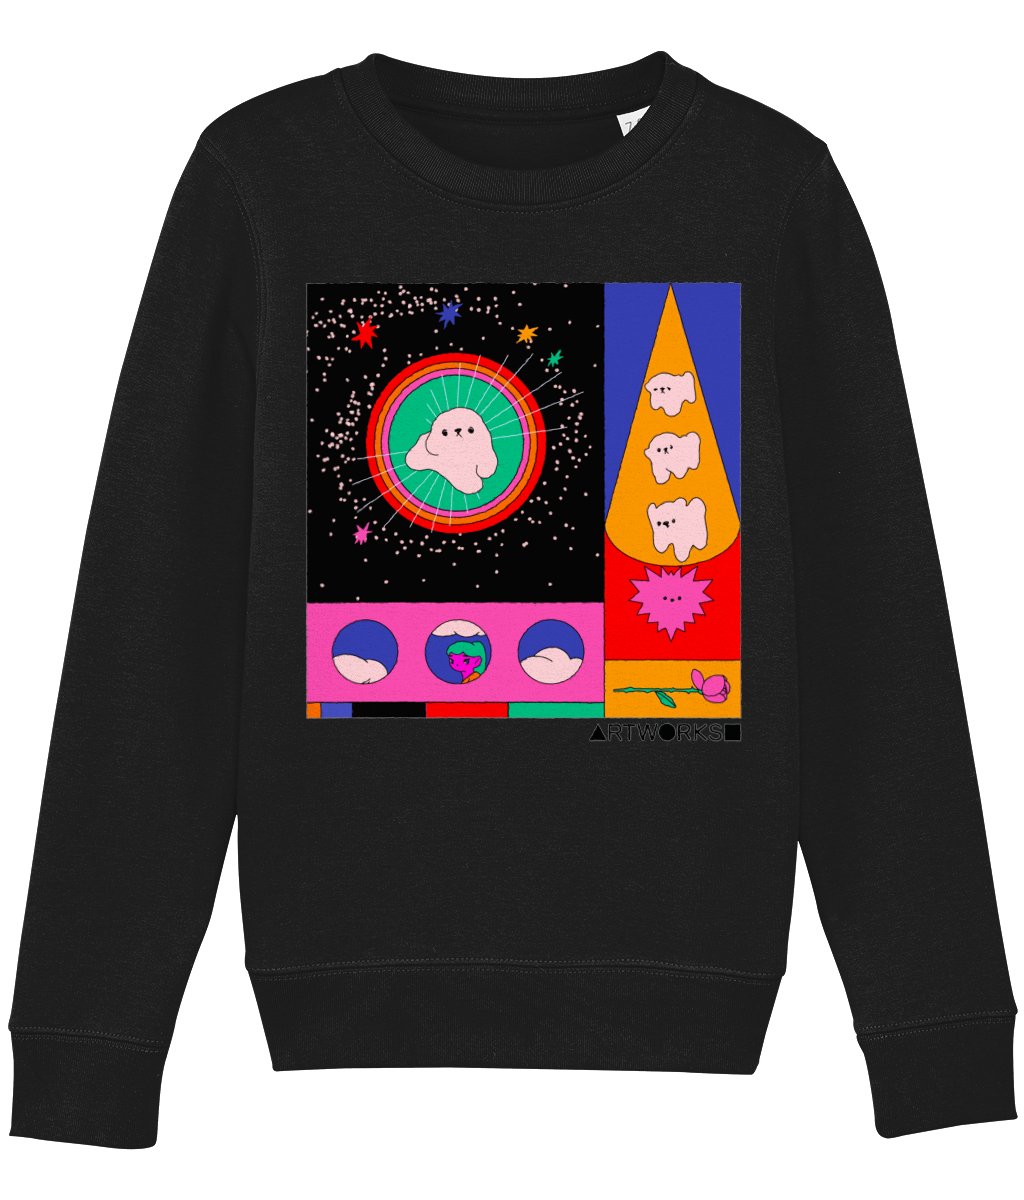 Nirvana Sweatshirt - Artworks Clothing